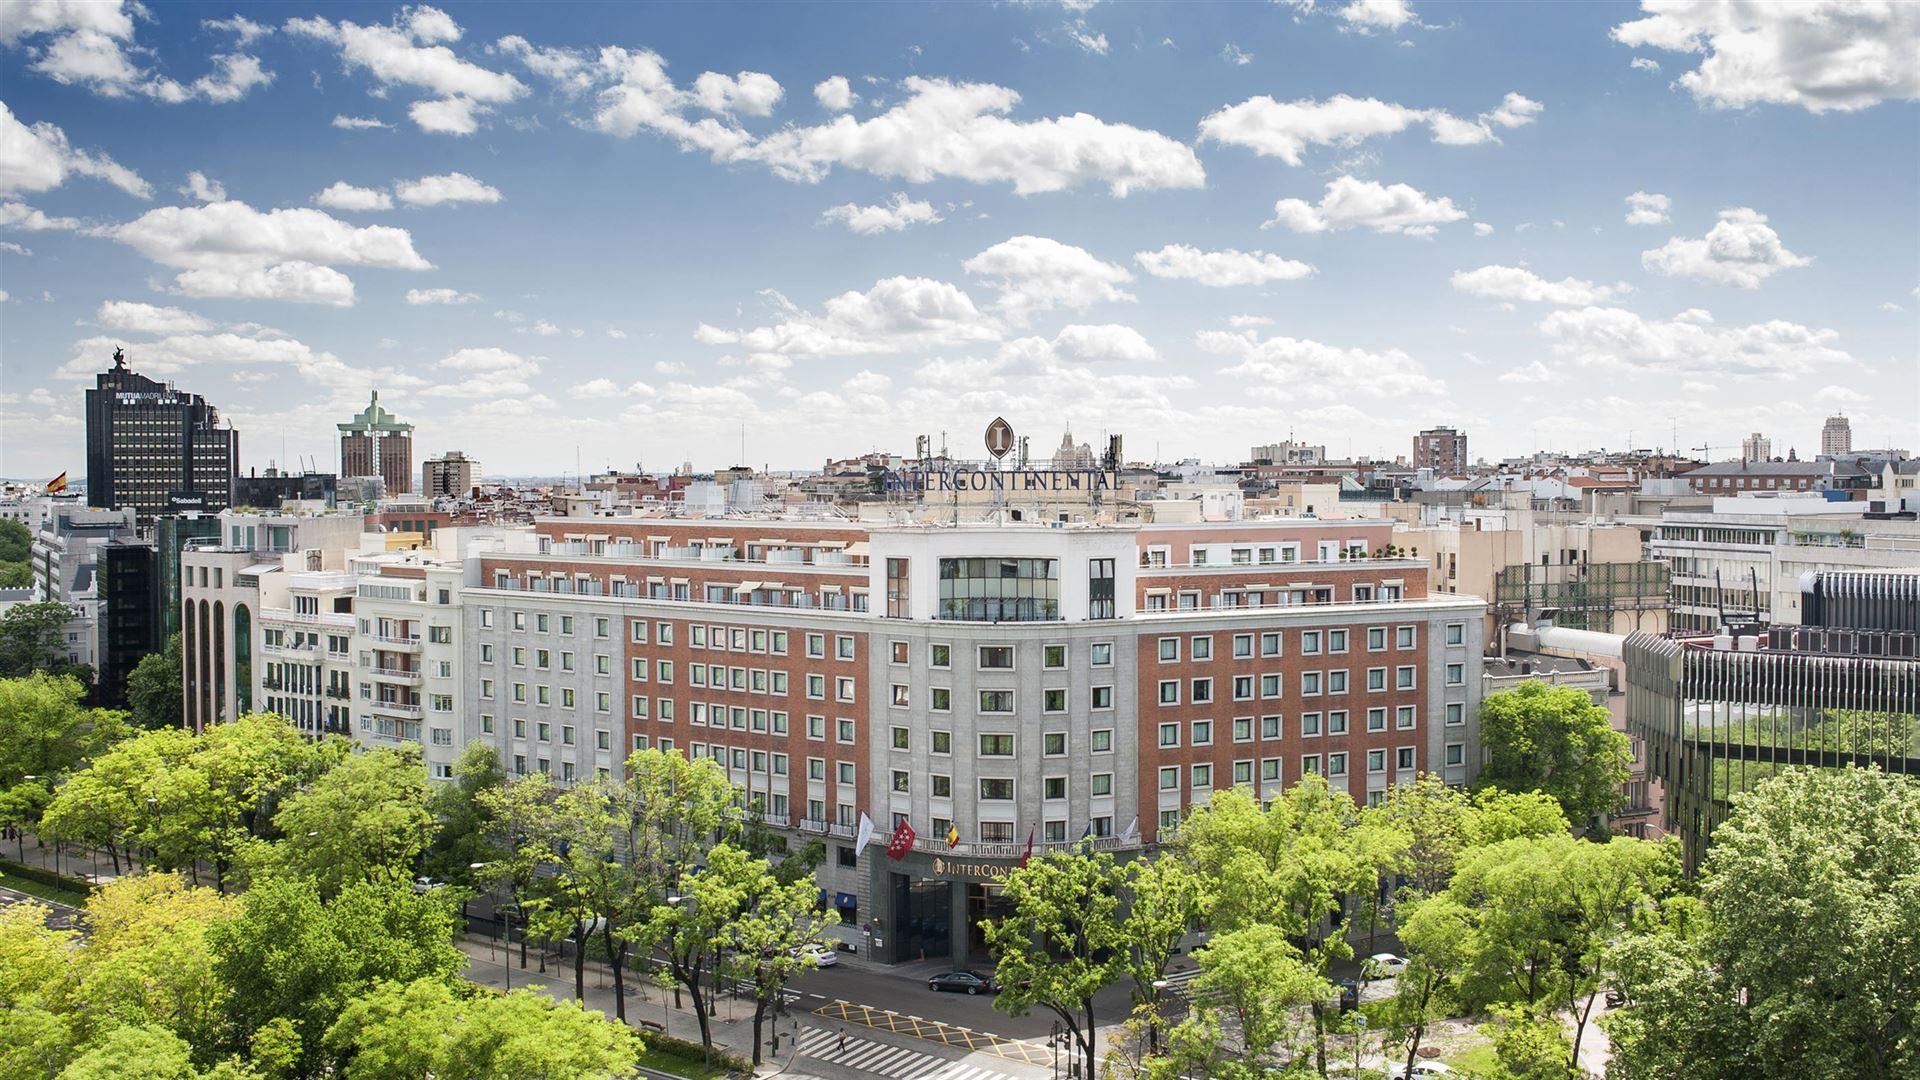 InterContinental Madrid luxe hotel deals